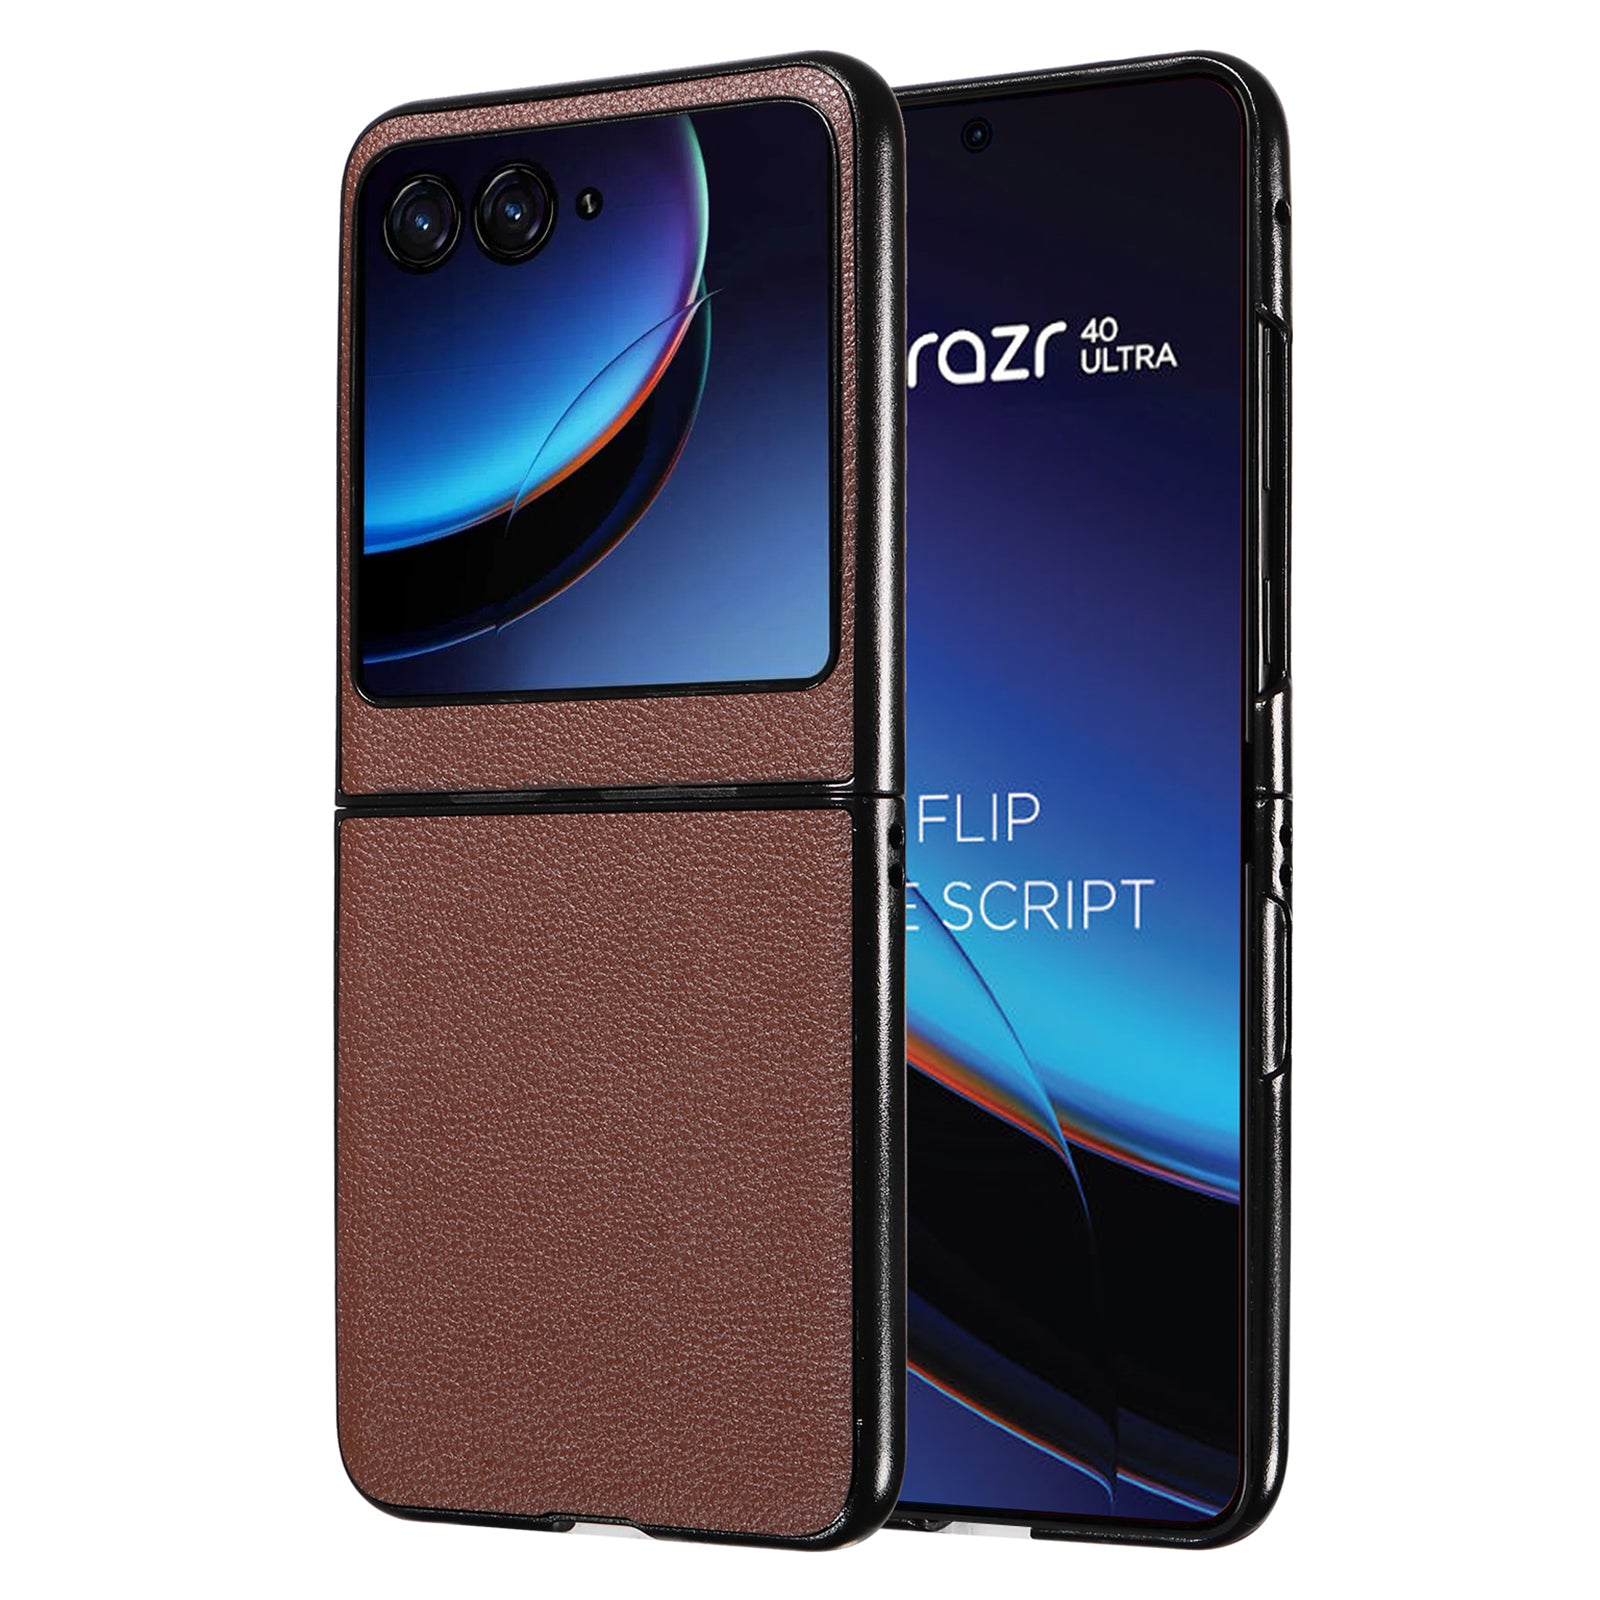 Uniqkart for Motorola Razr 40 Ultra 5G Litchi Texture Phone Case Shockproof Slim PU+PC Cover - Brown